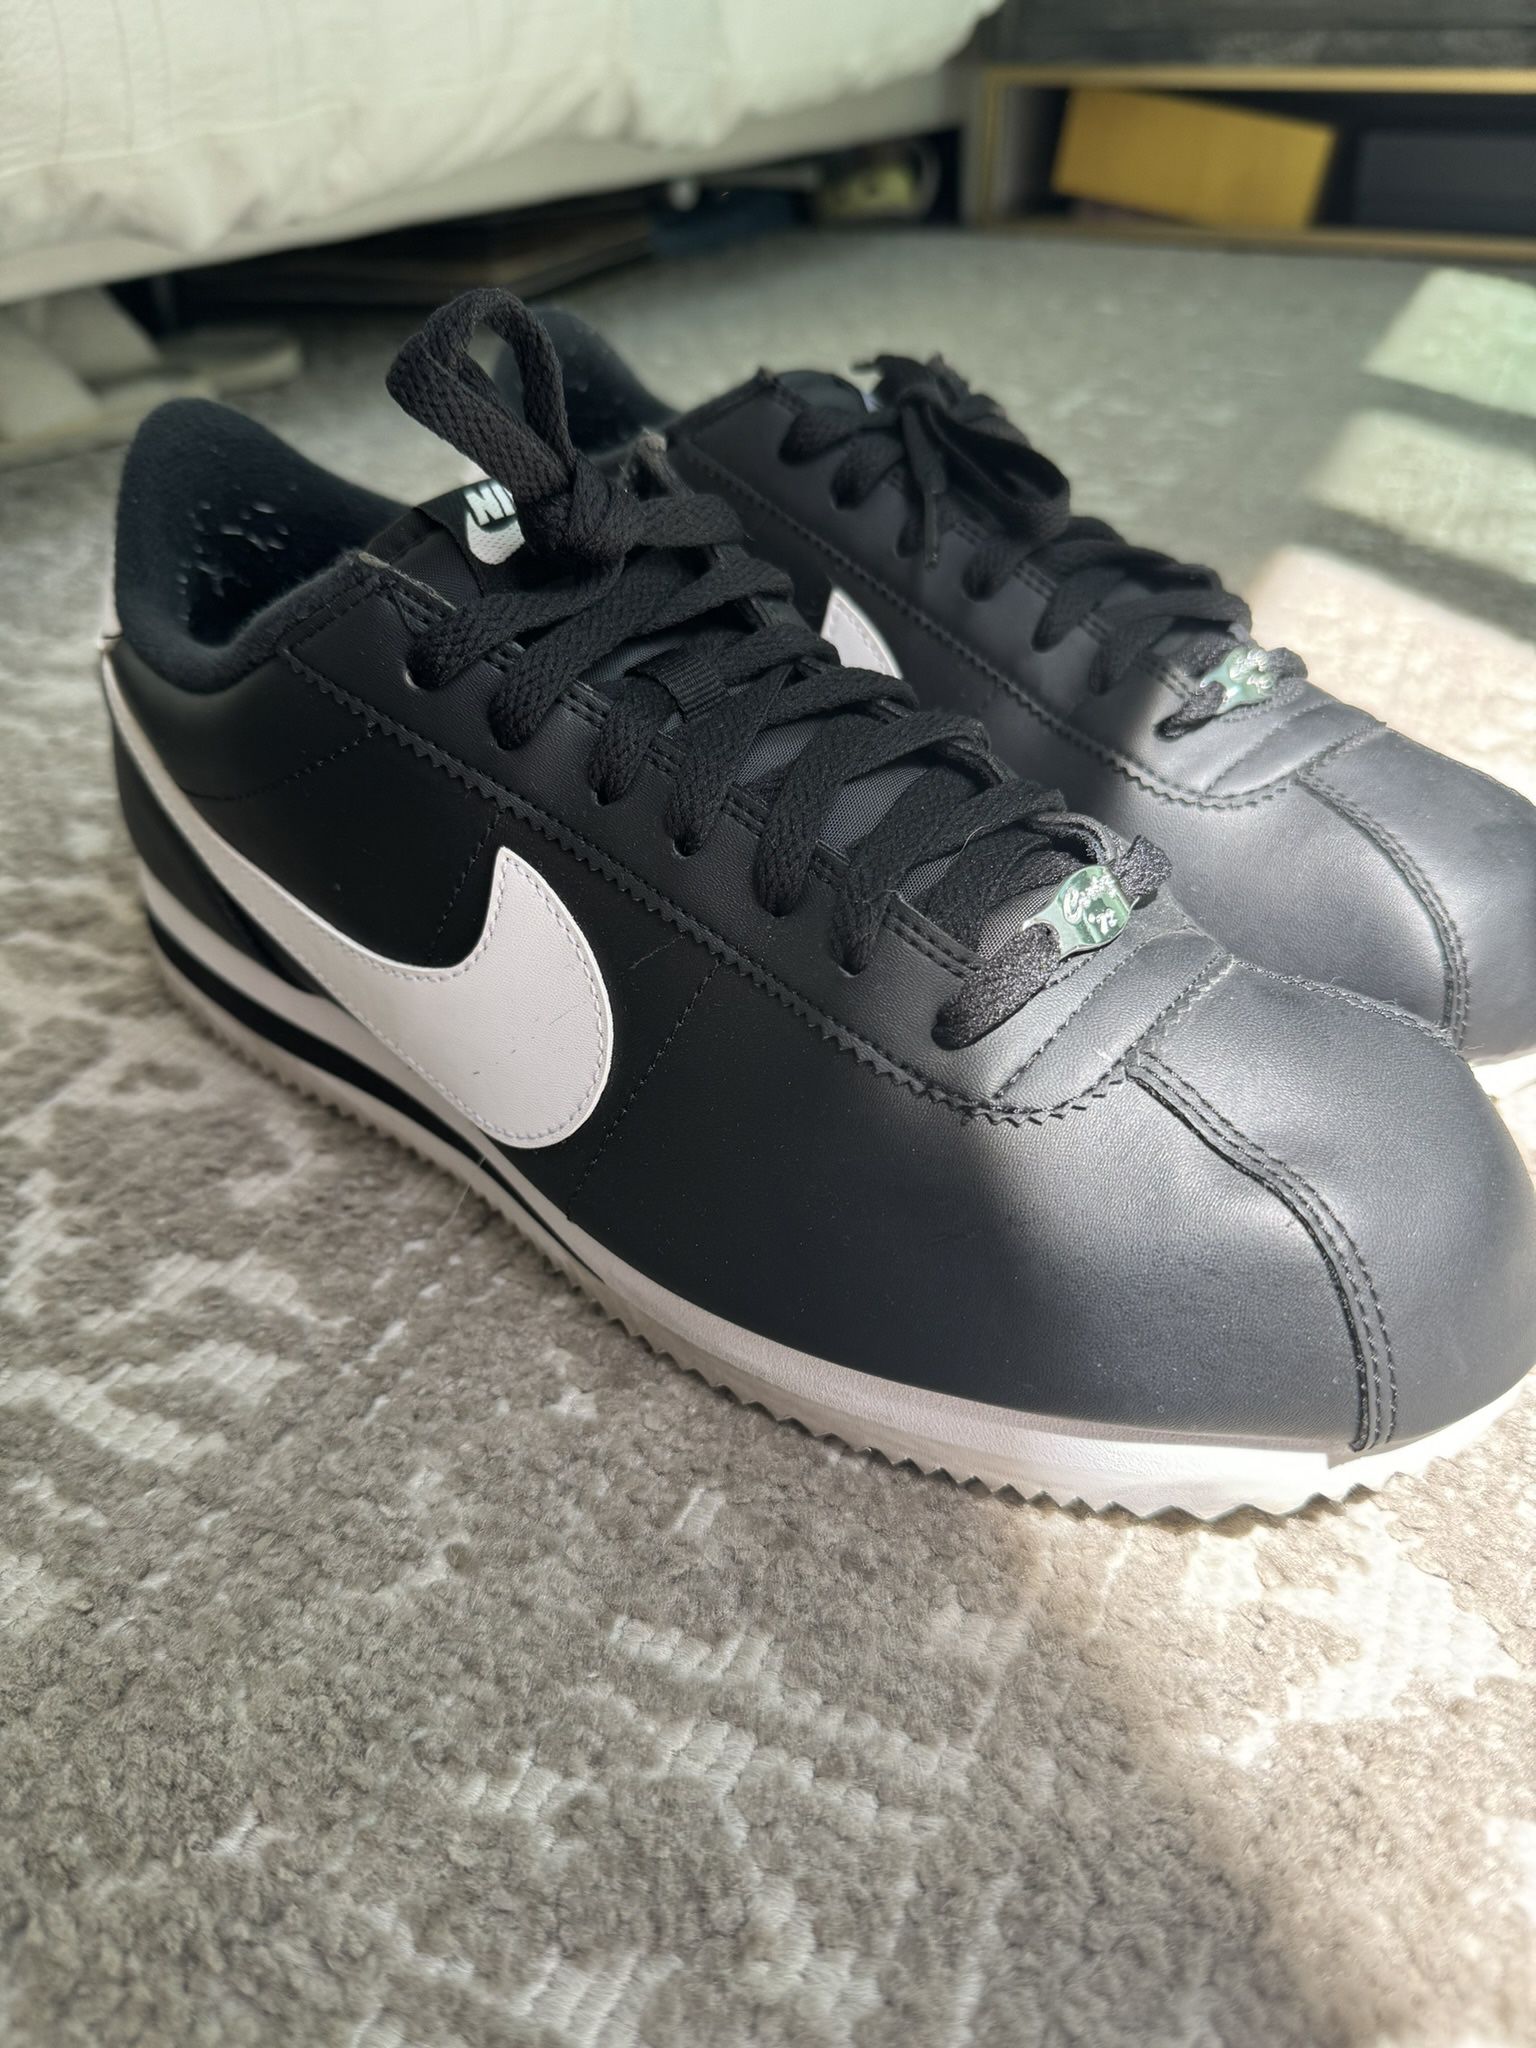 Men’s Nike Cortez Size 12